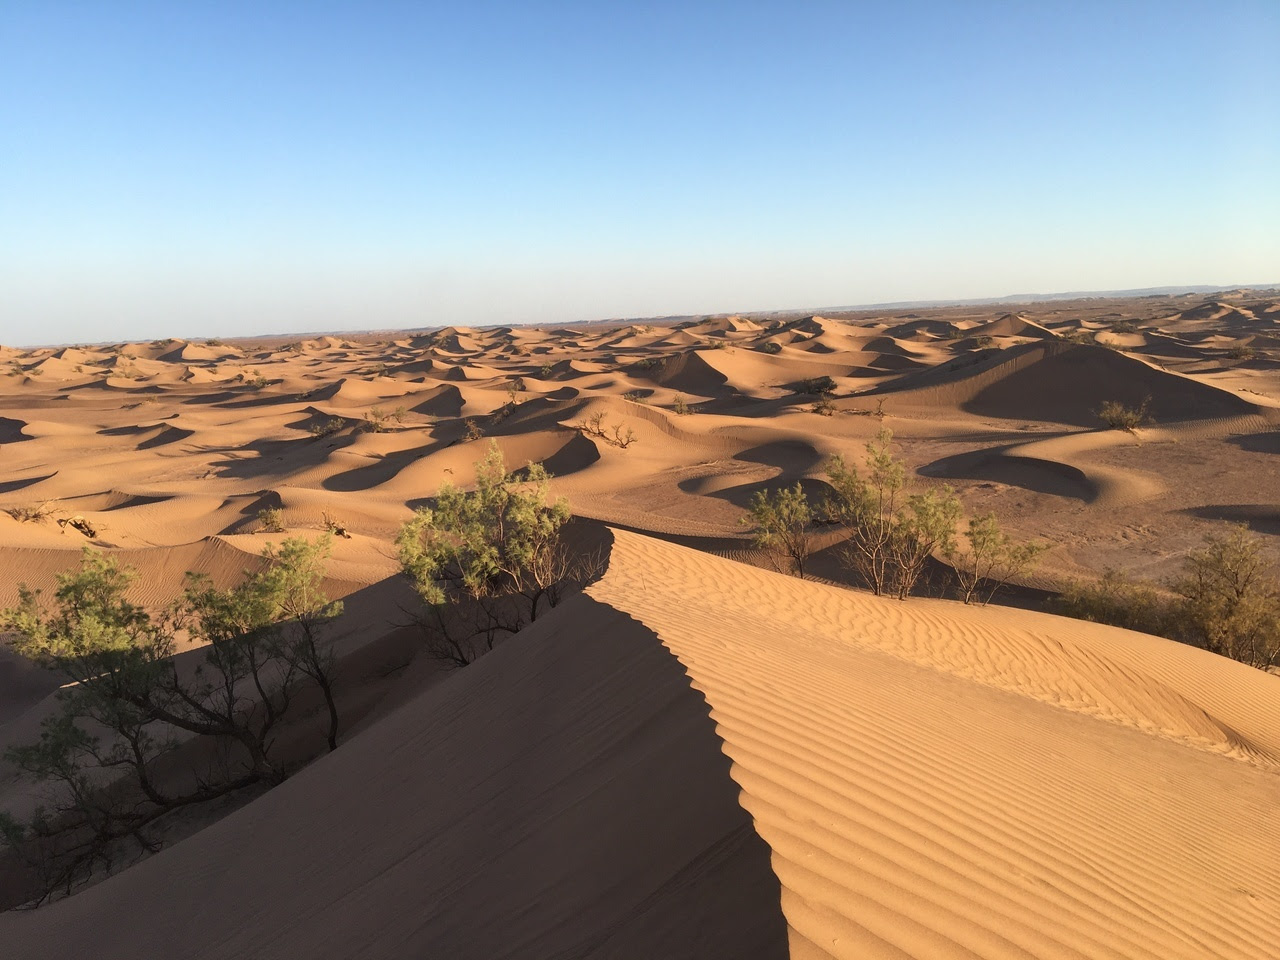 image of dunes in a desert